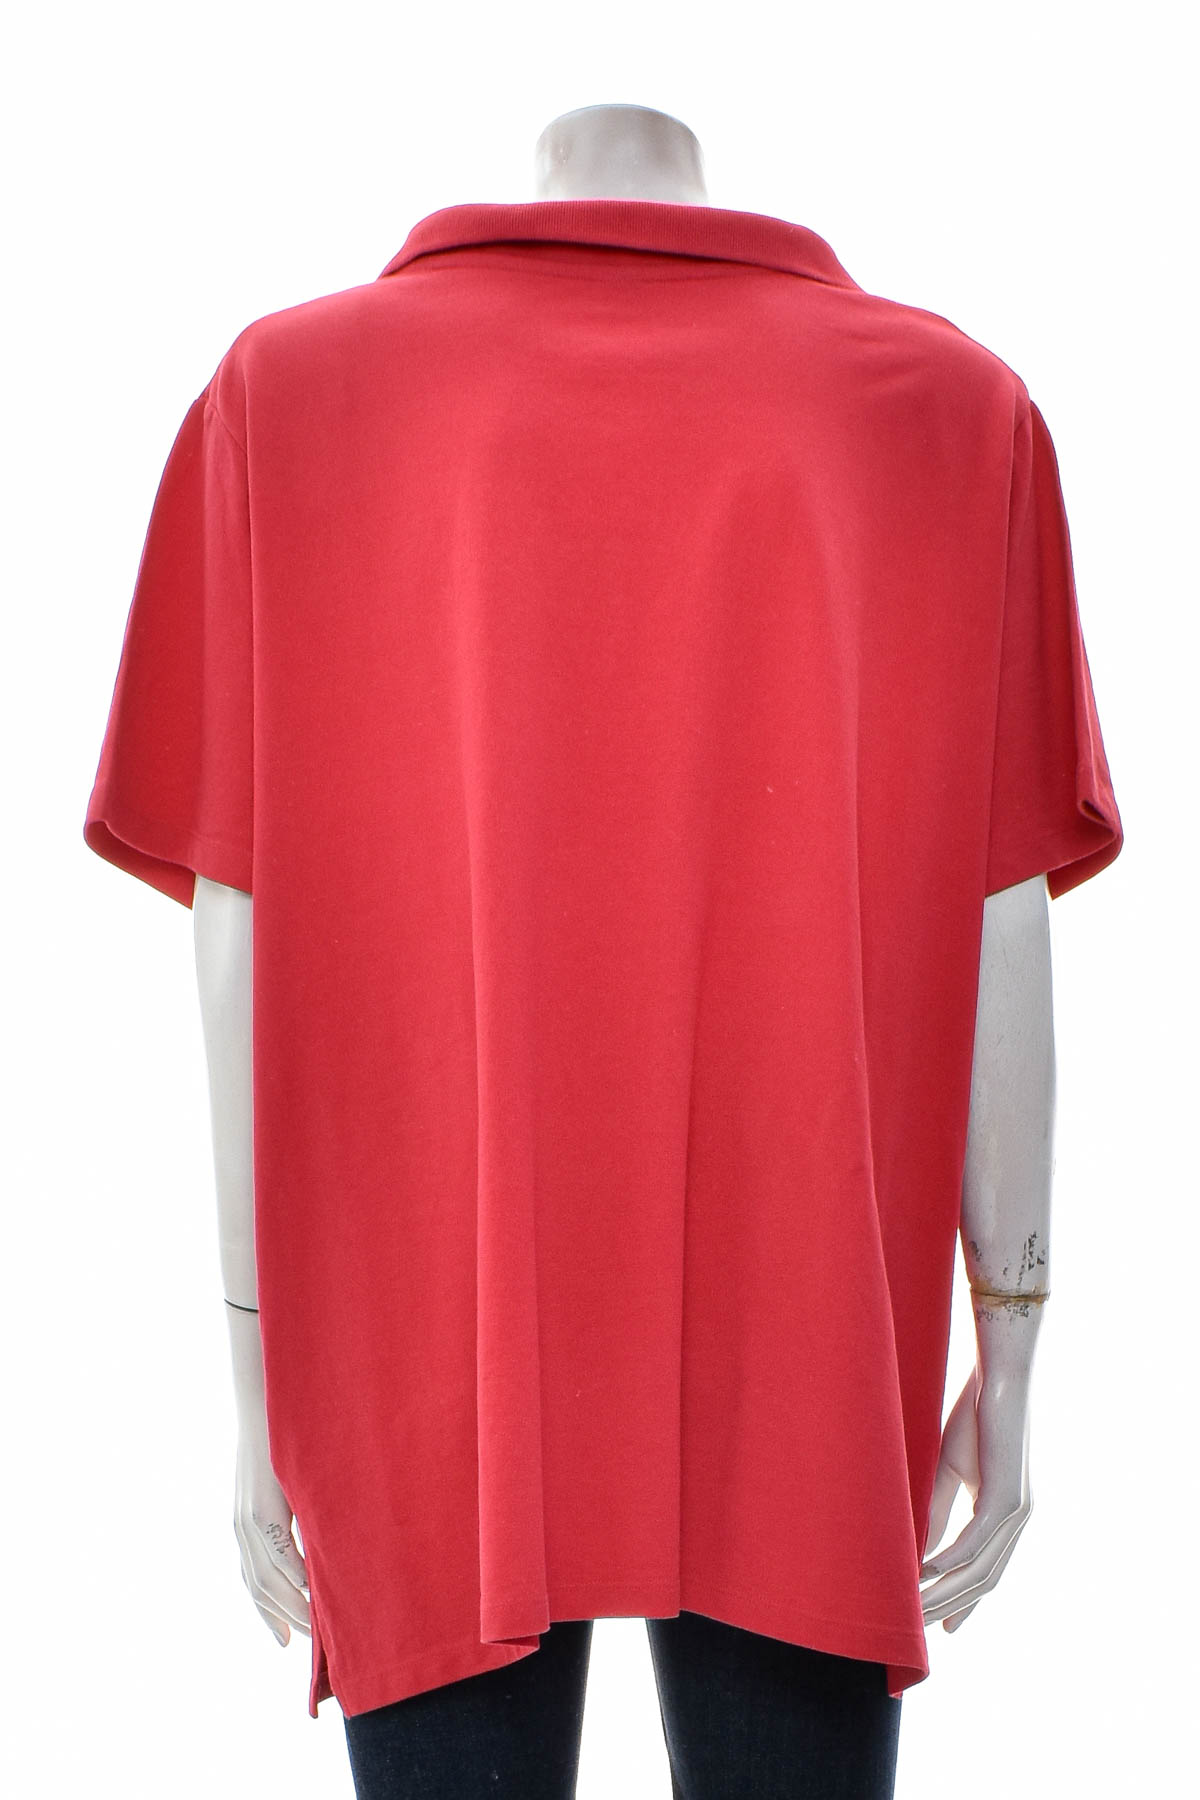 Women's t-shirt - Bpc selection bonprix collection - 1